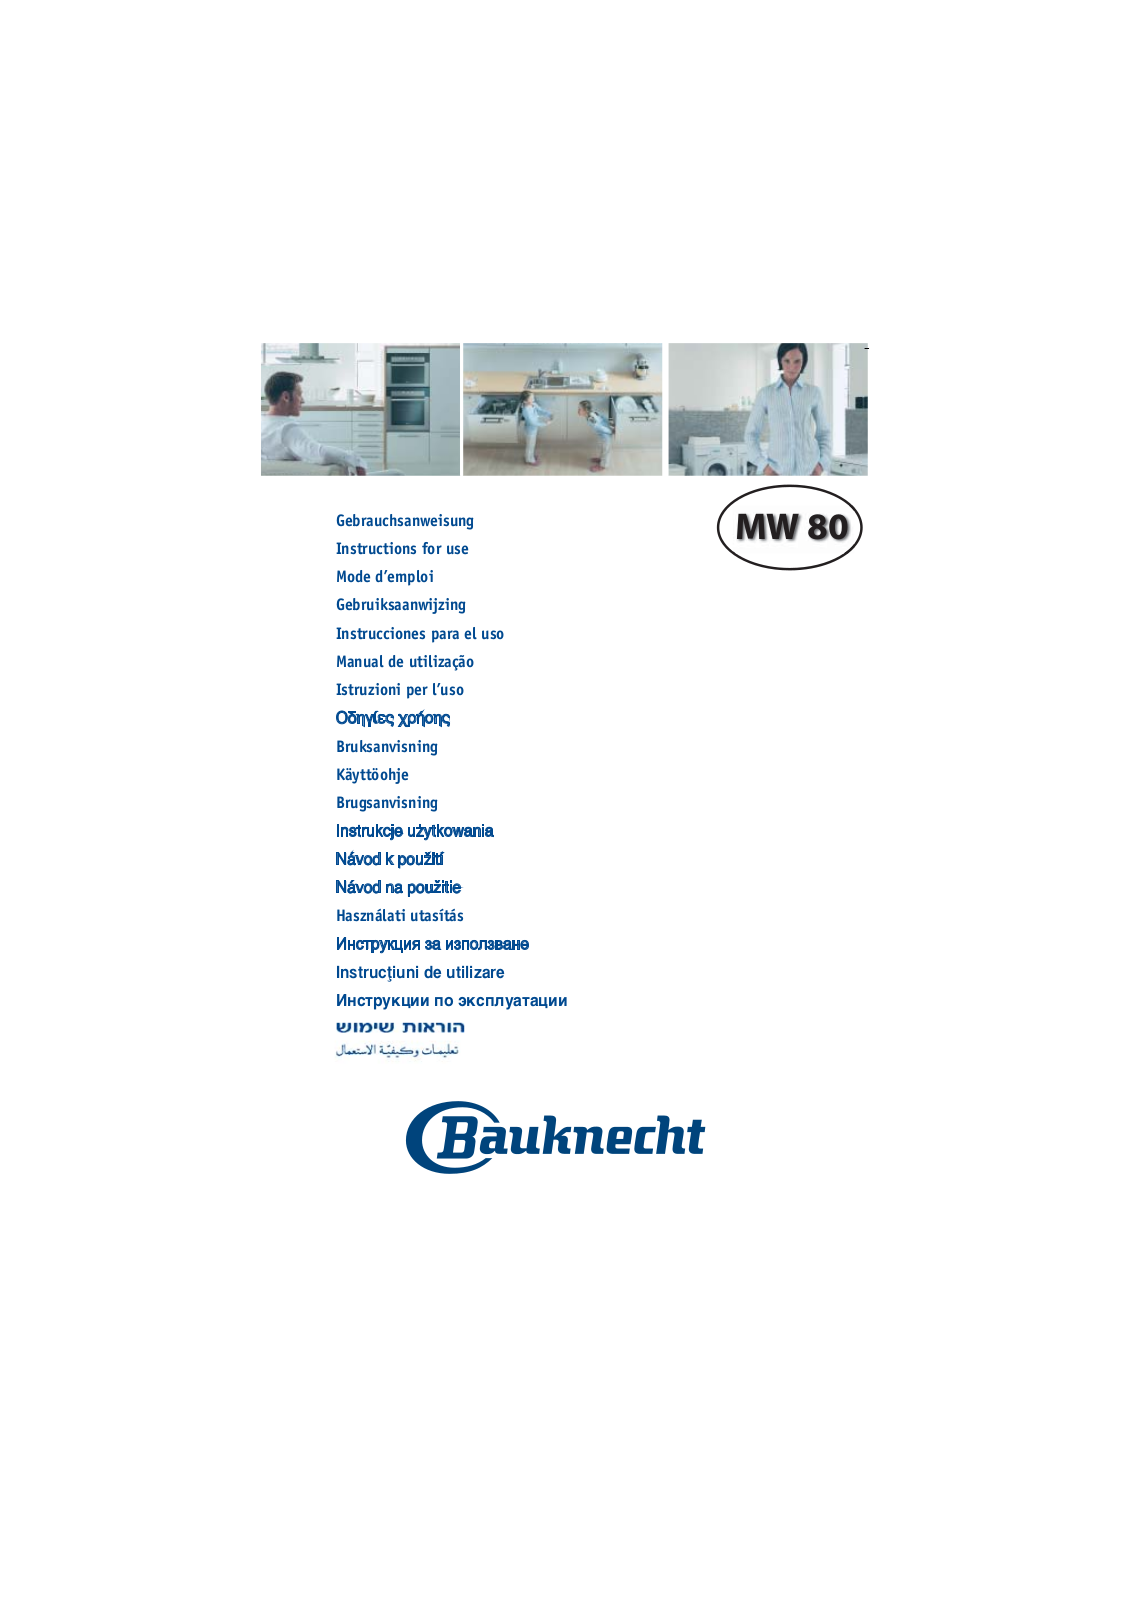 Bauknecht MW 80 IX User Manual